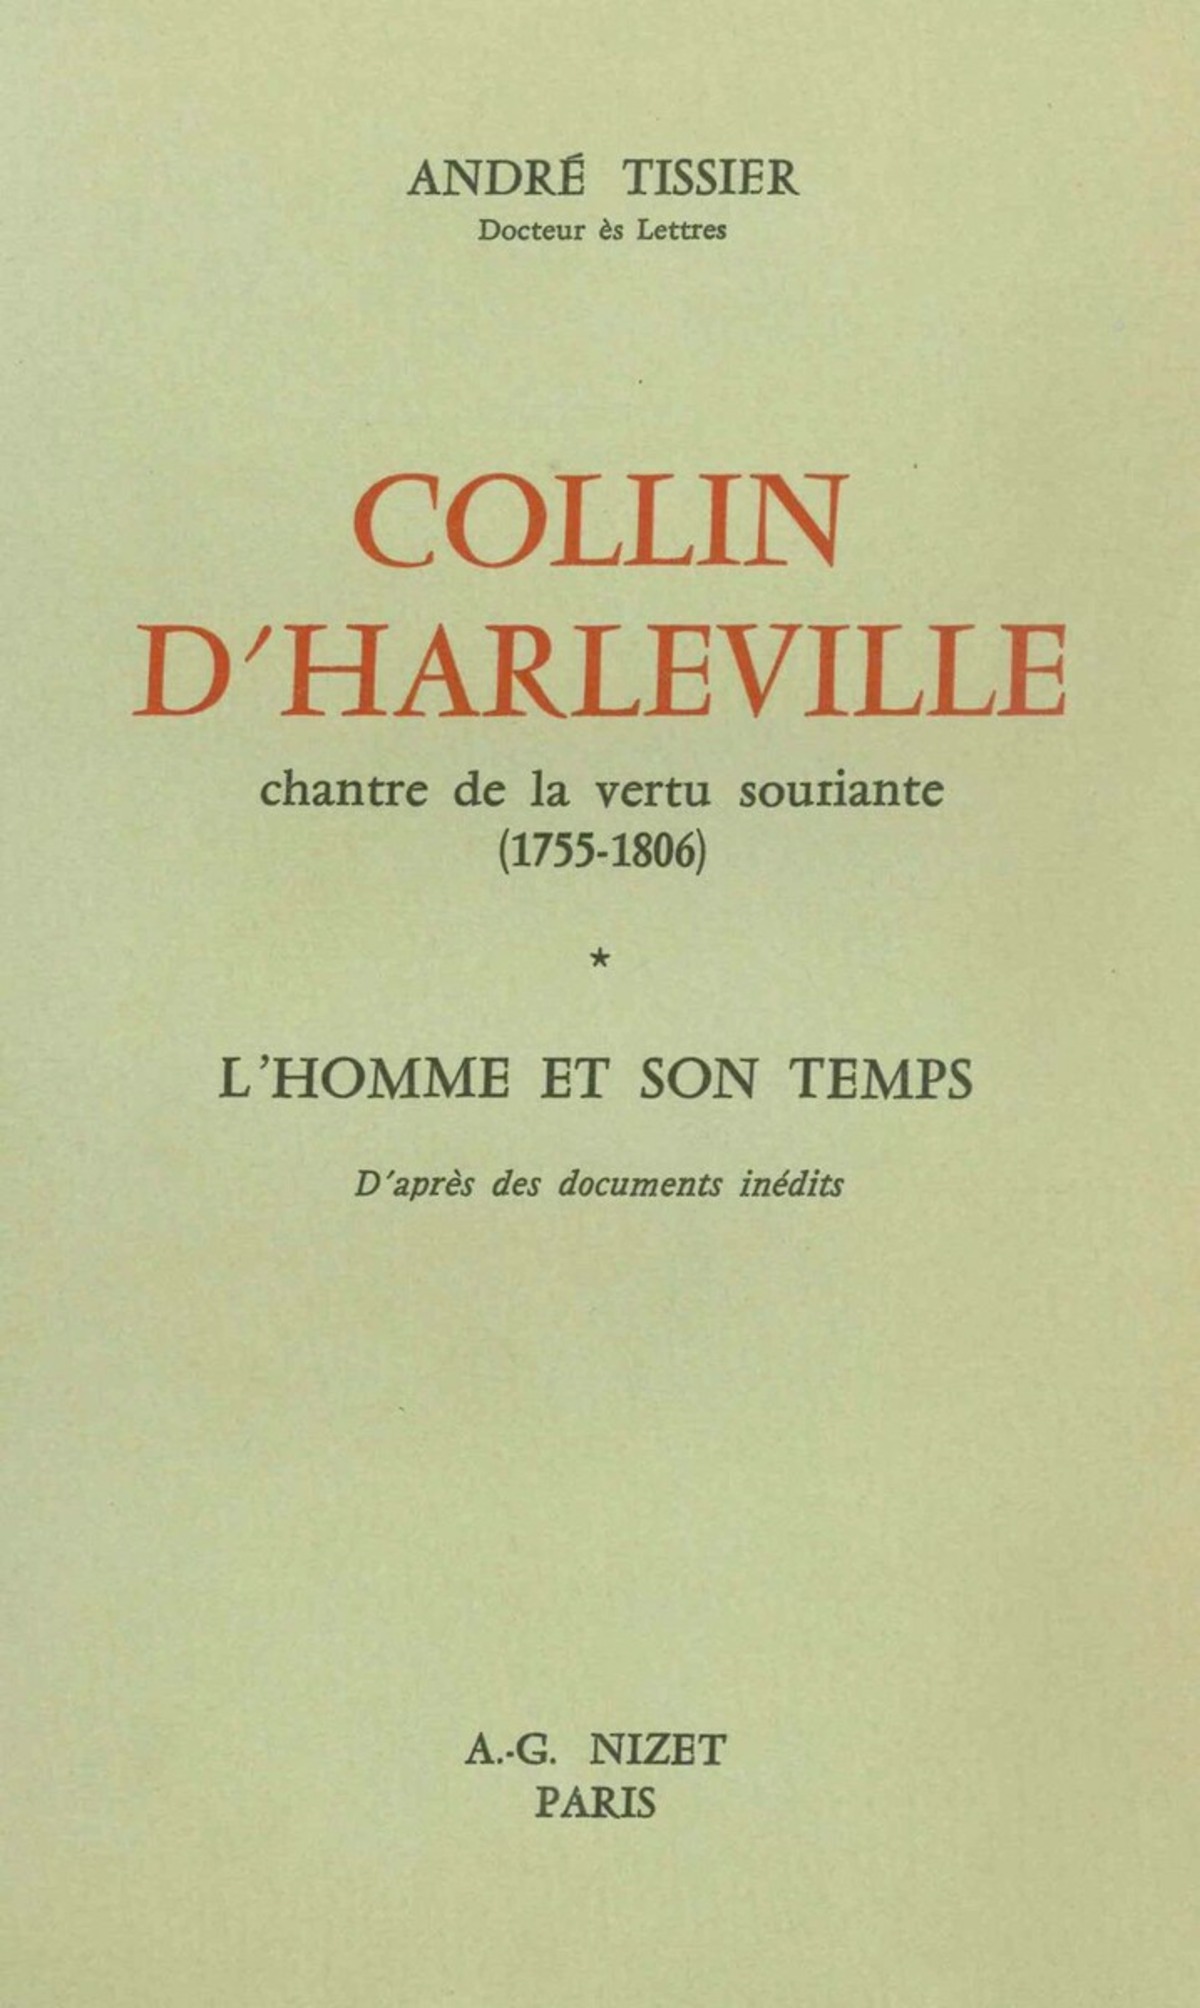 Collin d'Harleville, chantre de la vertu souriante (1755-1806)